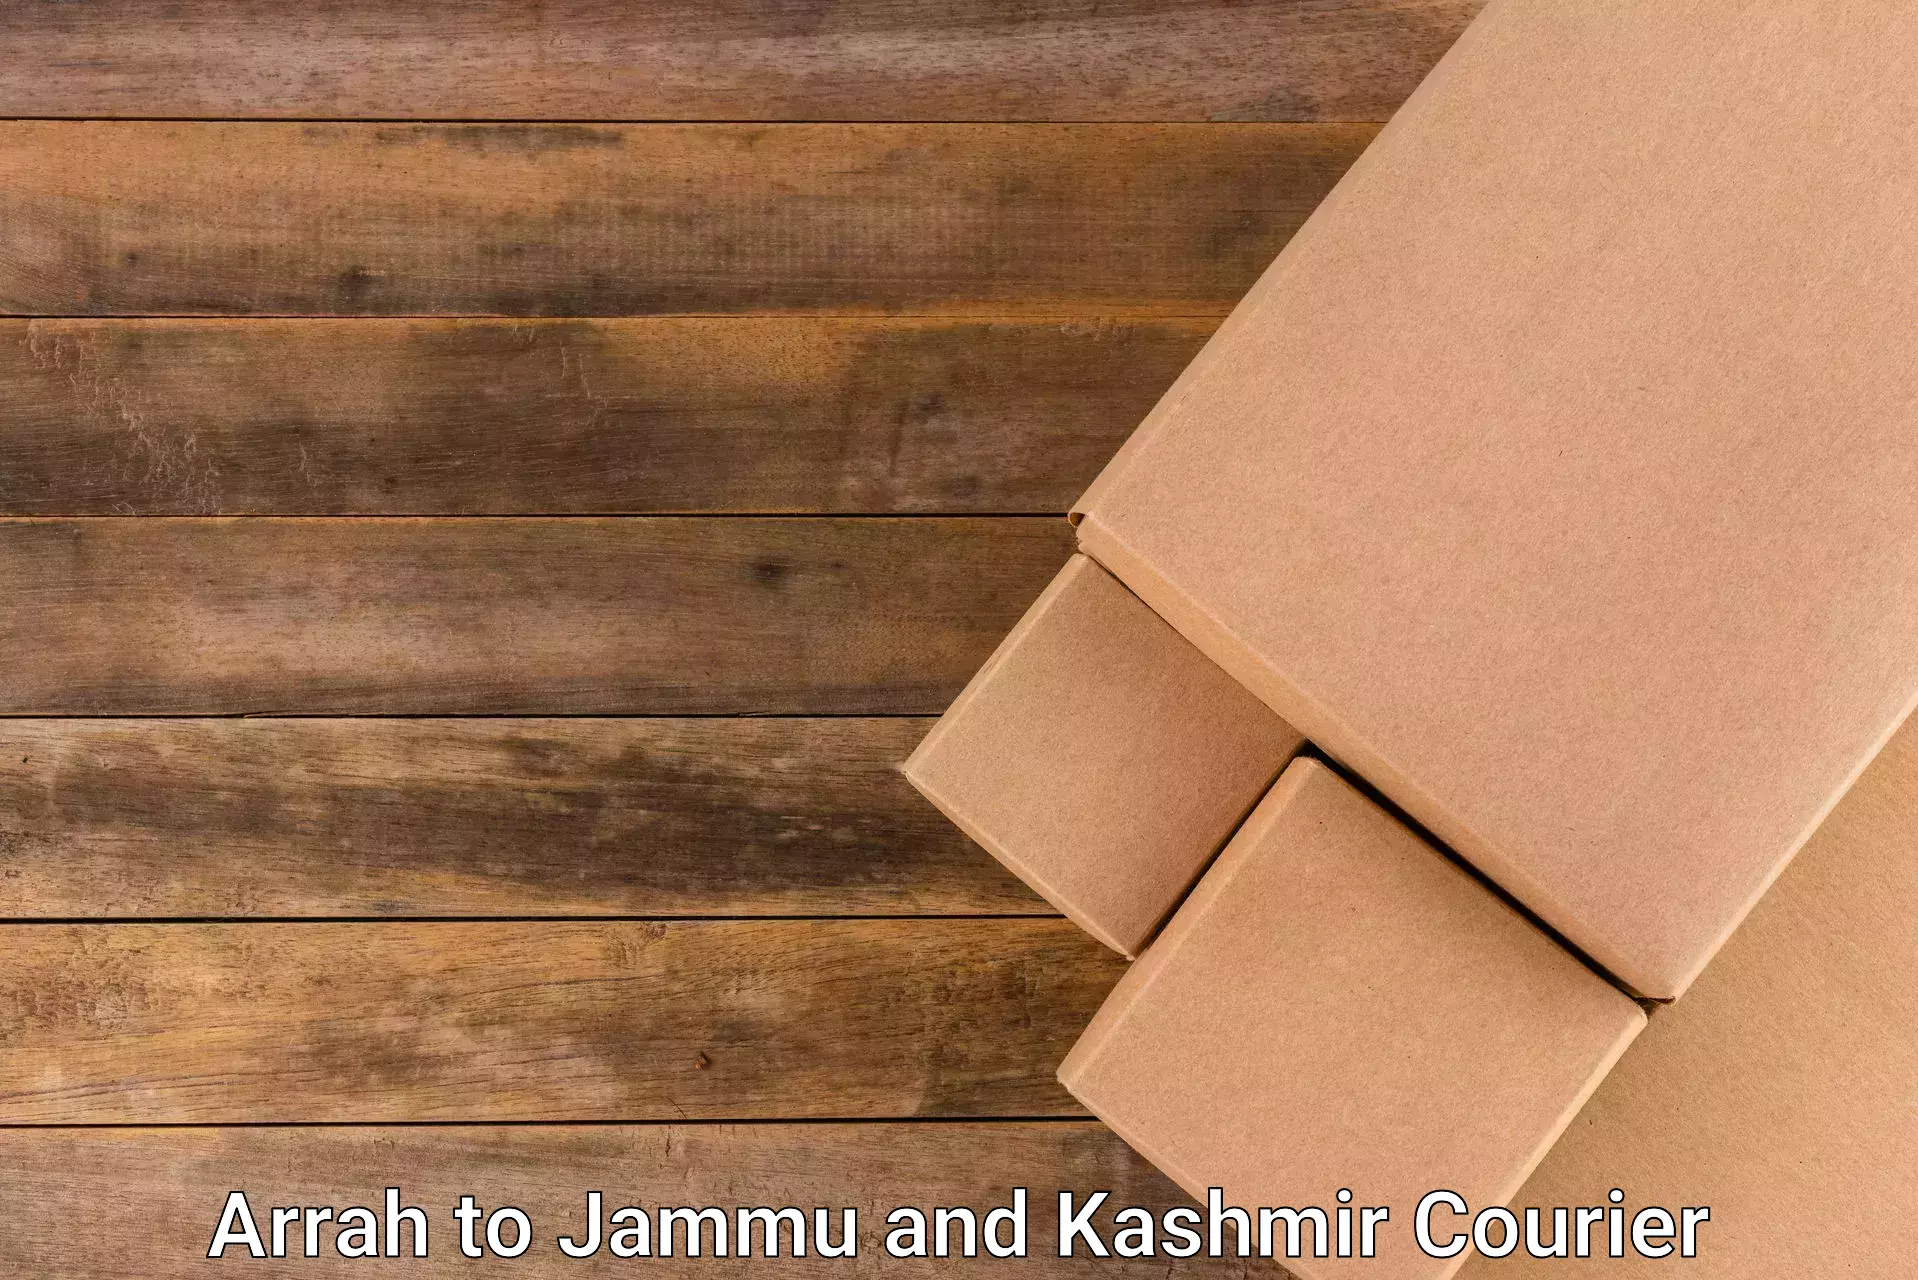 Parcel handling and care Arrah to Jammu and Kashmir